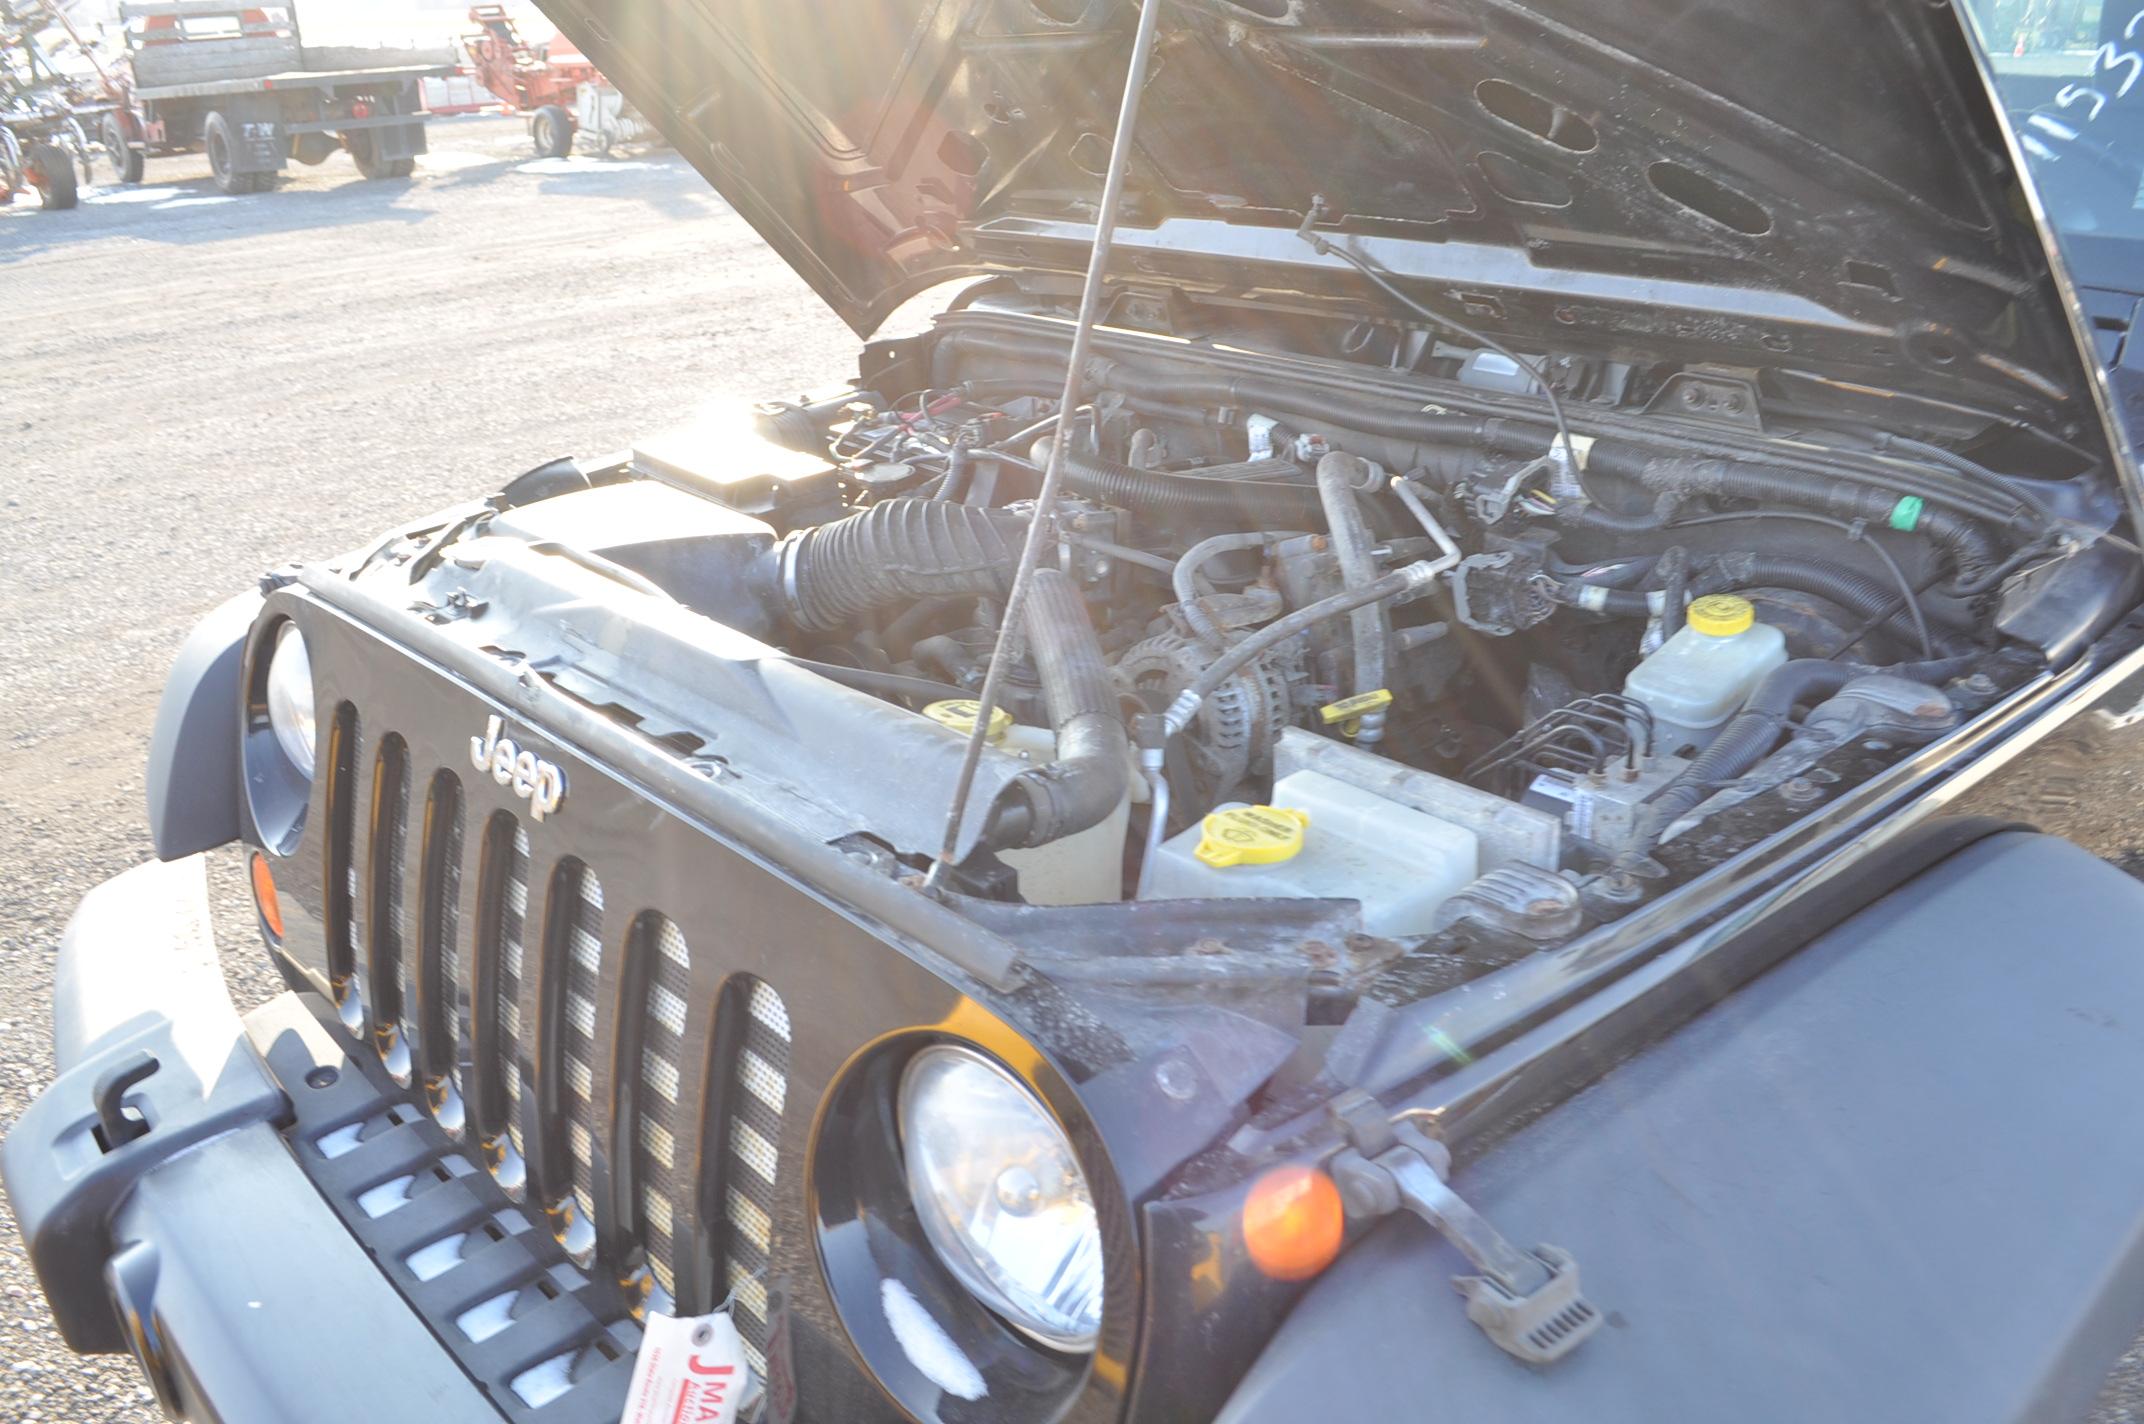 '07 Jeep Wrangler X w/ 112,873mi, 4wd, manual 5spd trans, V6 engine (recent new clutch; just gone th